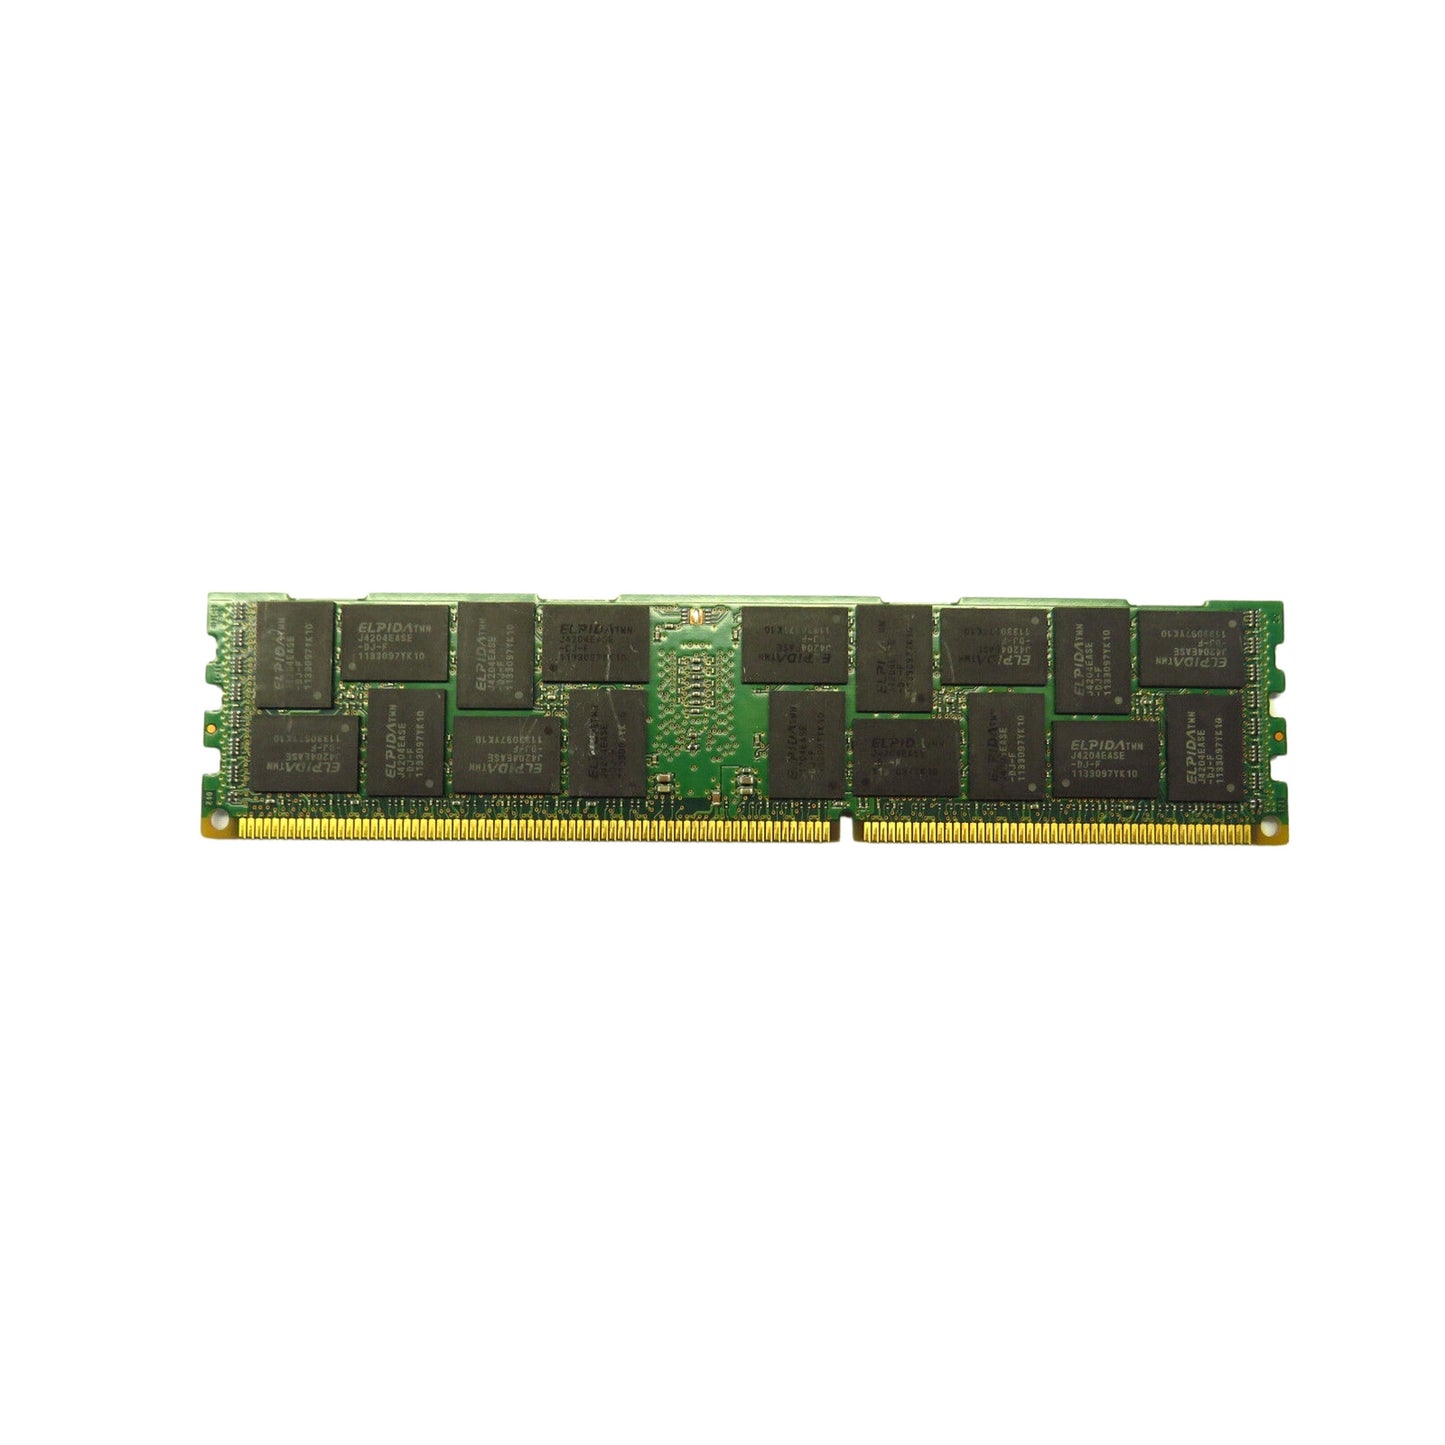 HP 628974-081 16GB 2Rx4 PC3L-10600R 1333MHz DDR3 RDIMM Server Memory (Refurbished)